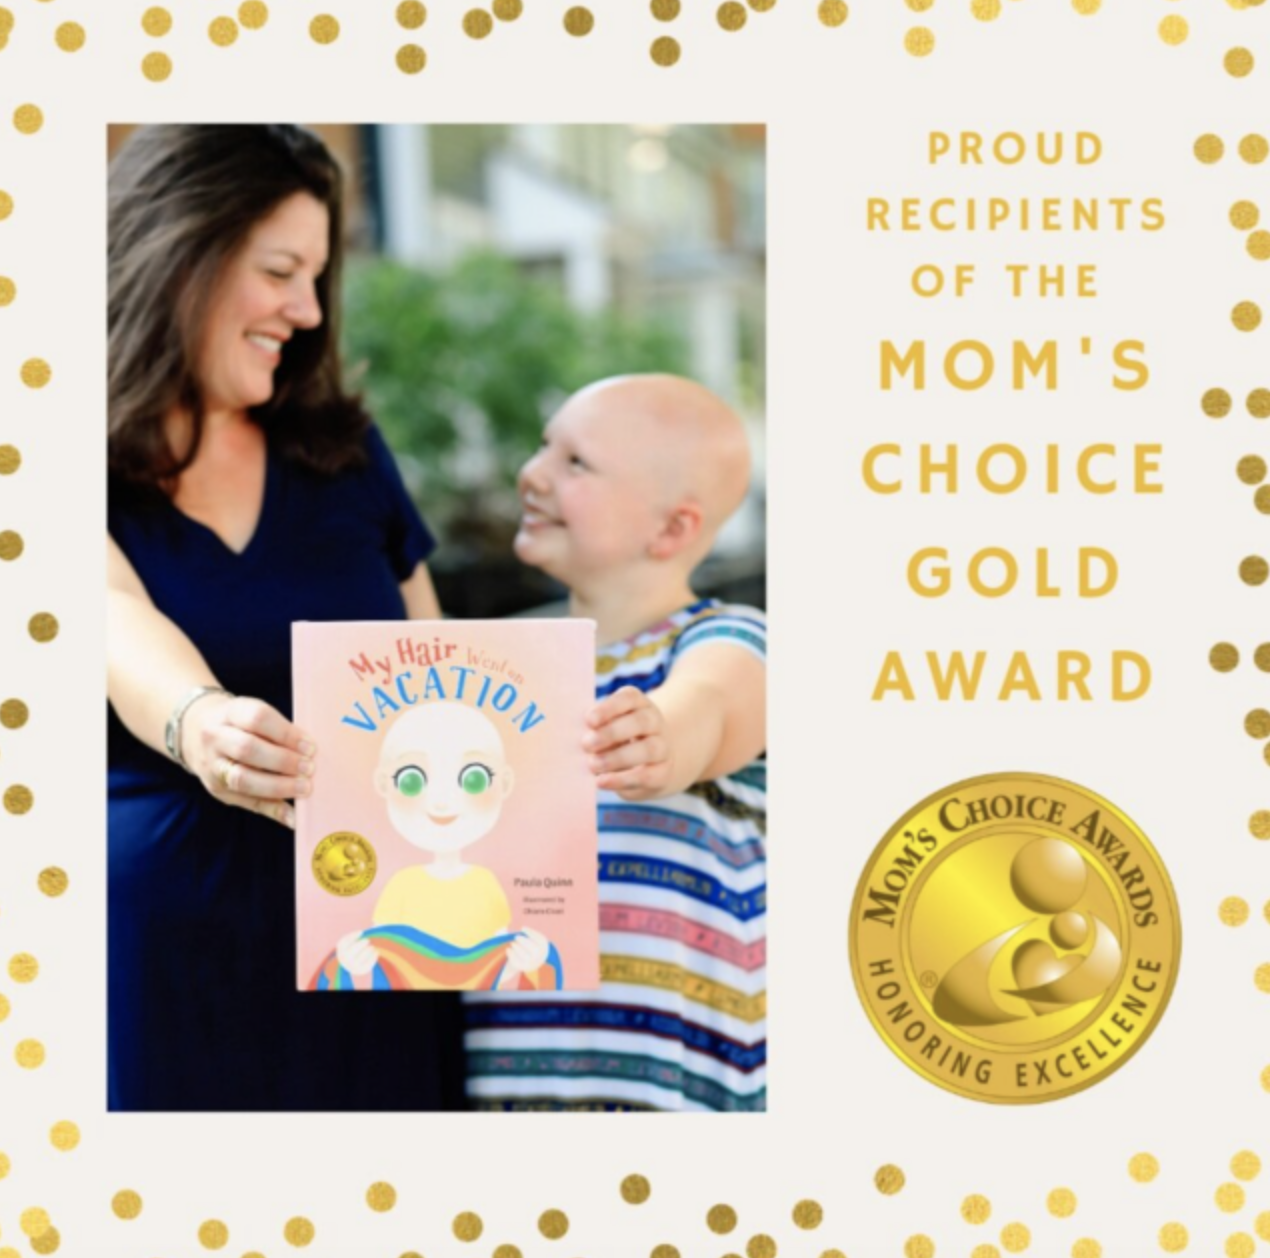 Mom's Choice Gold Award, October 2020